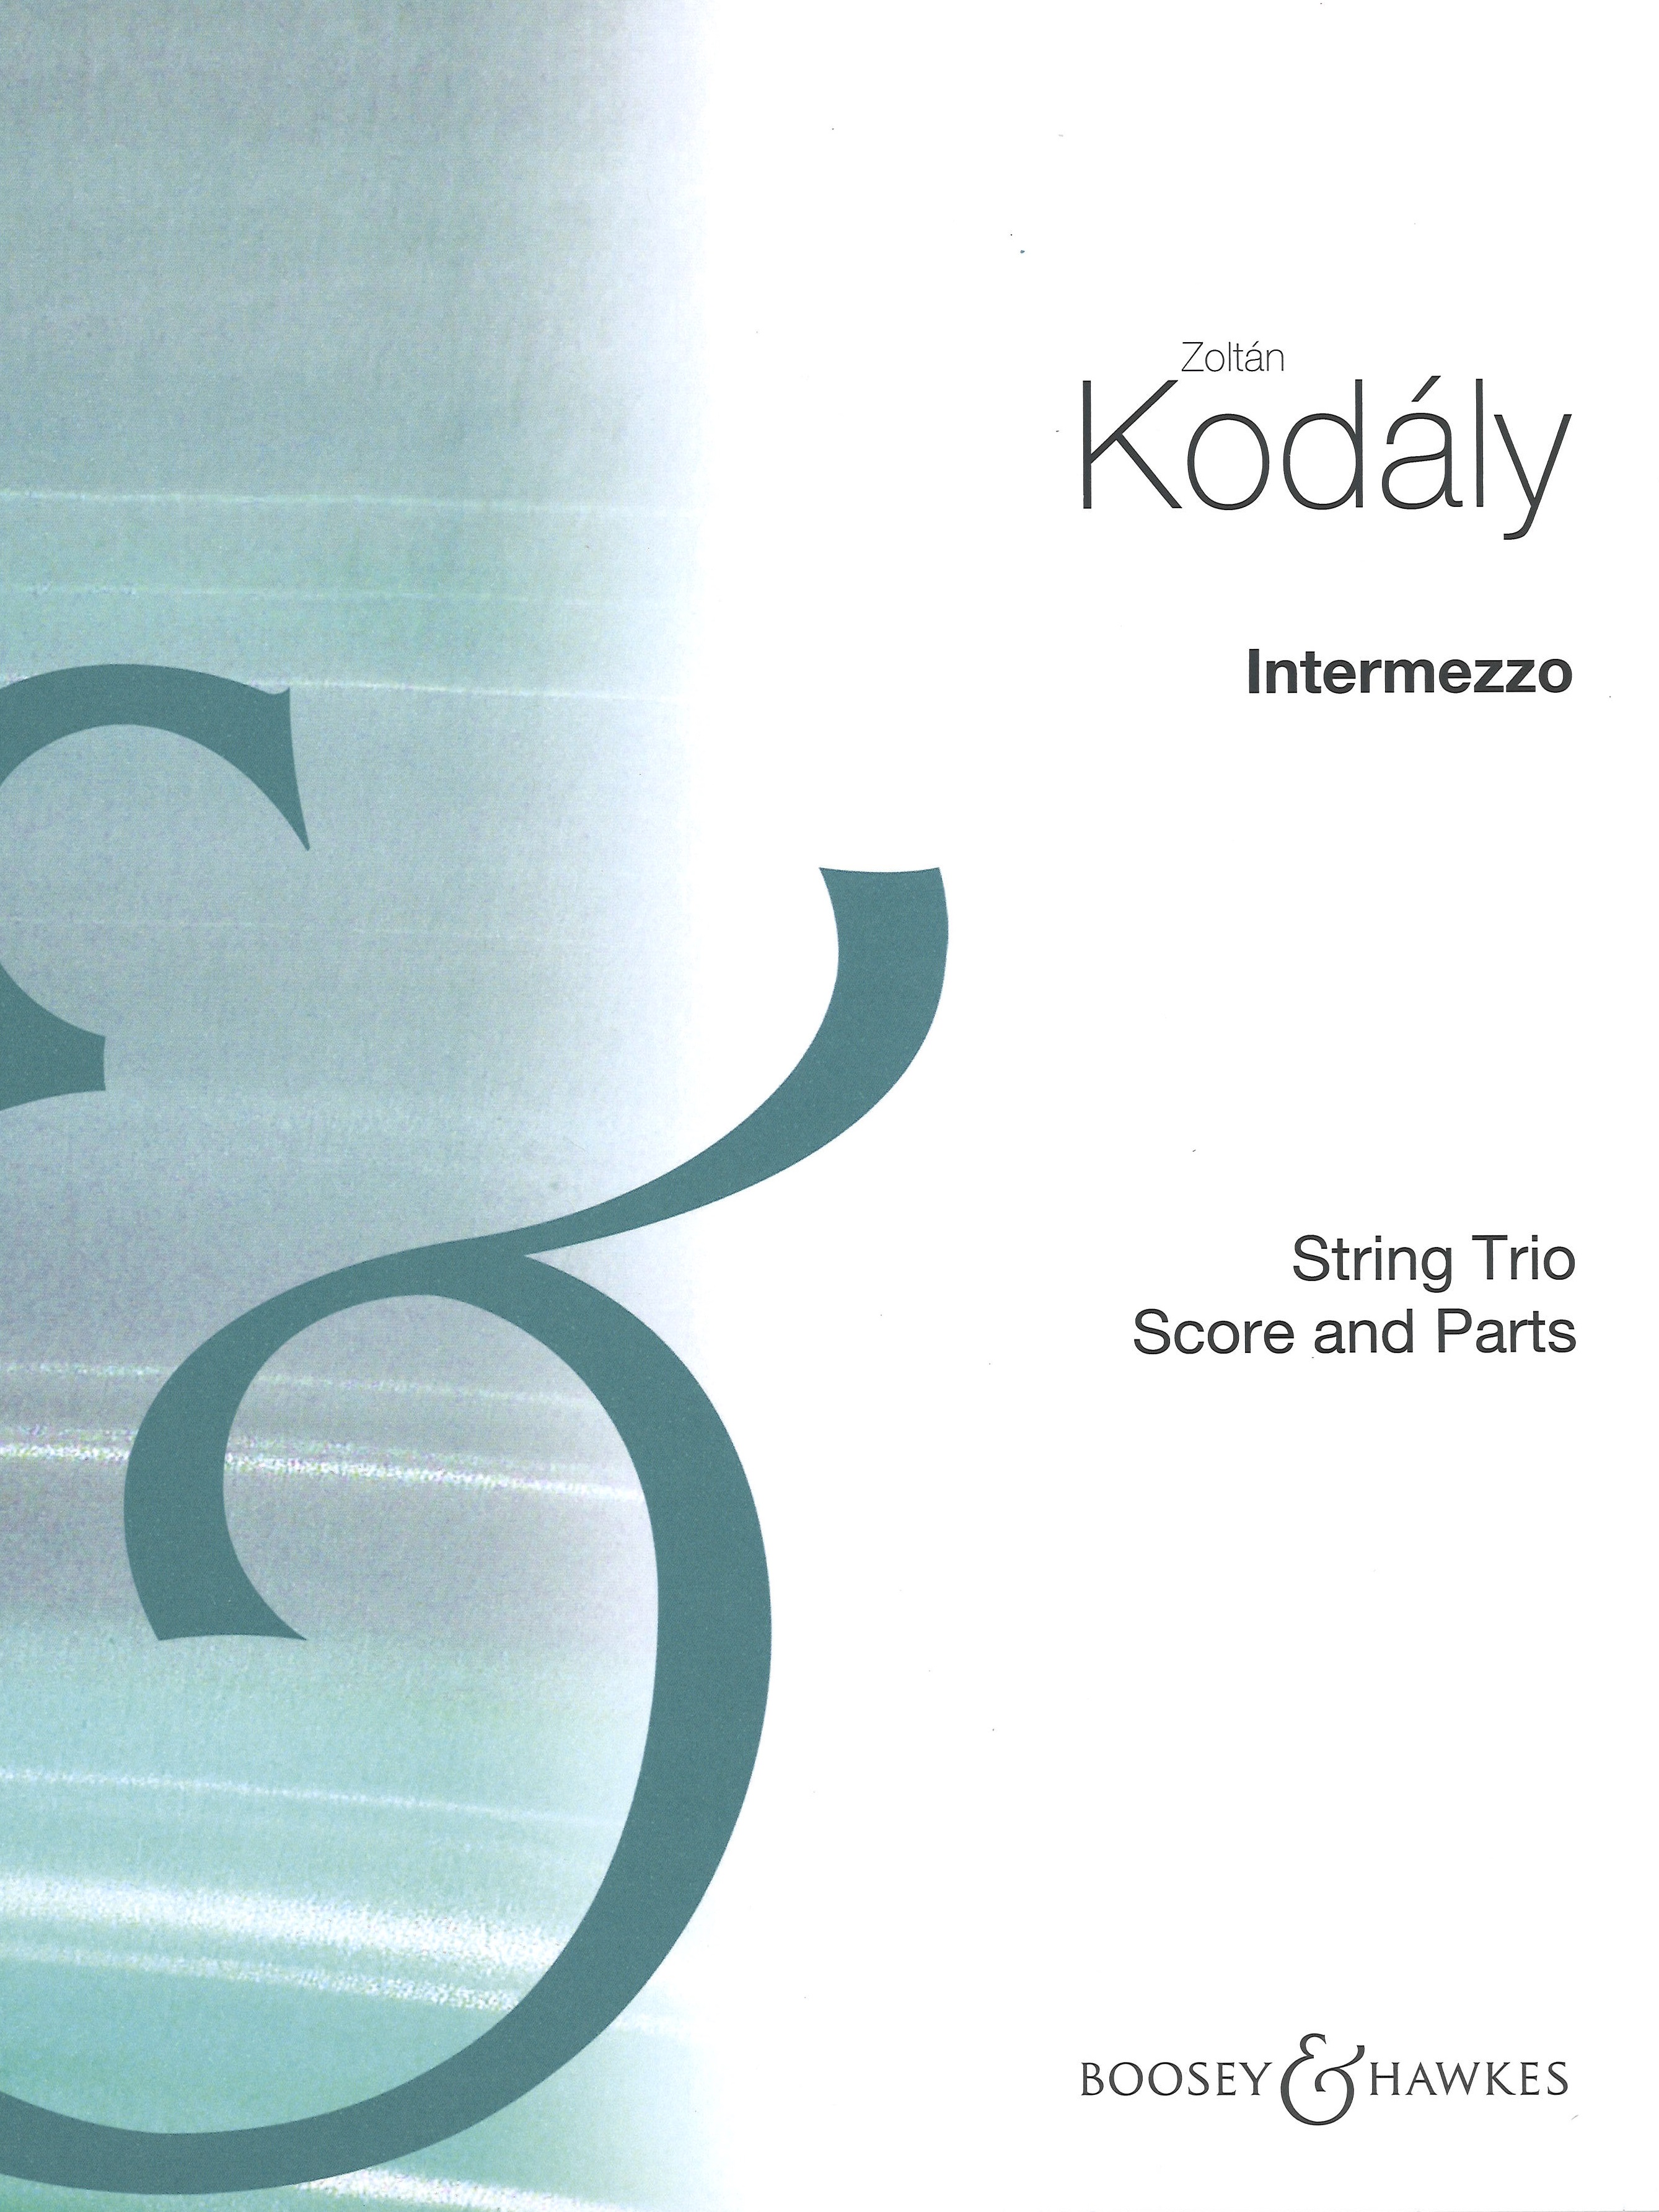 Kodaly Intermezzo String Trio Score & Parts Sheet Music Songbook